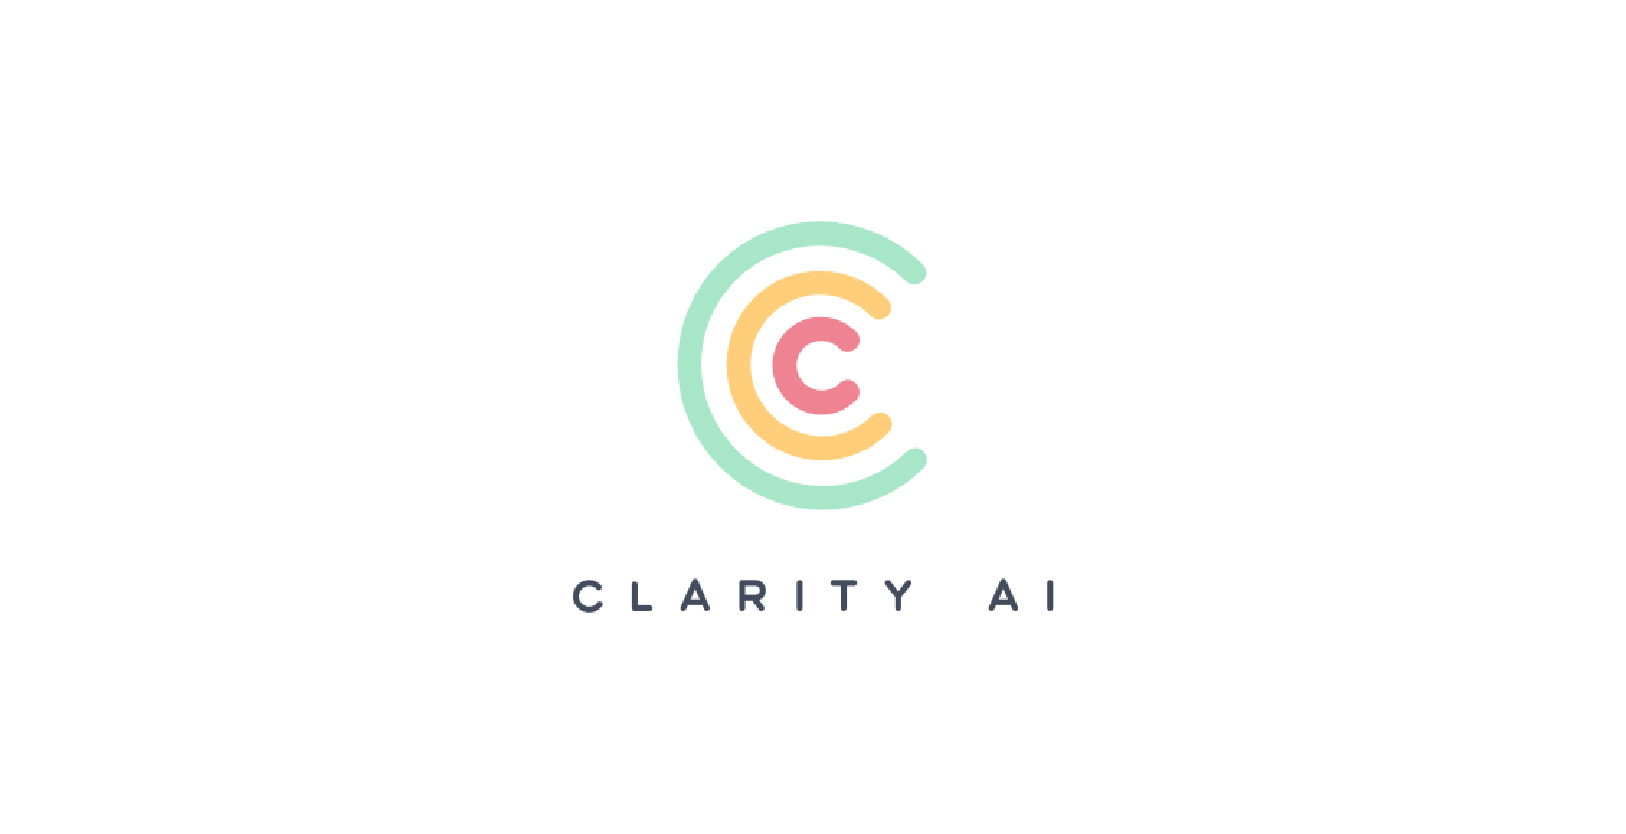 VisionFund Portfolio Company Clarity AI's Logo